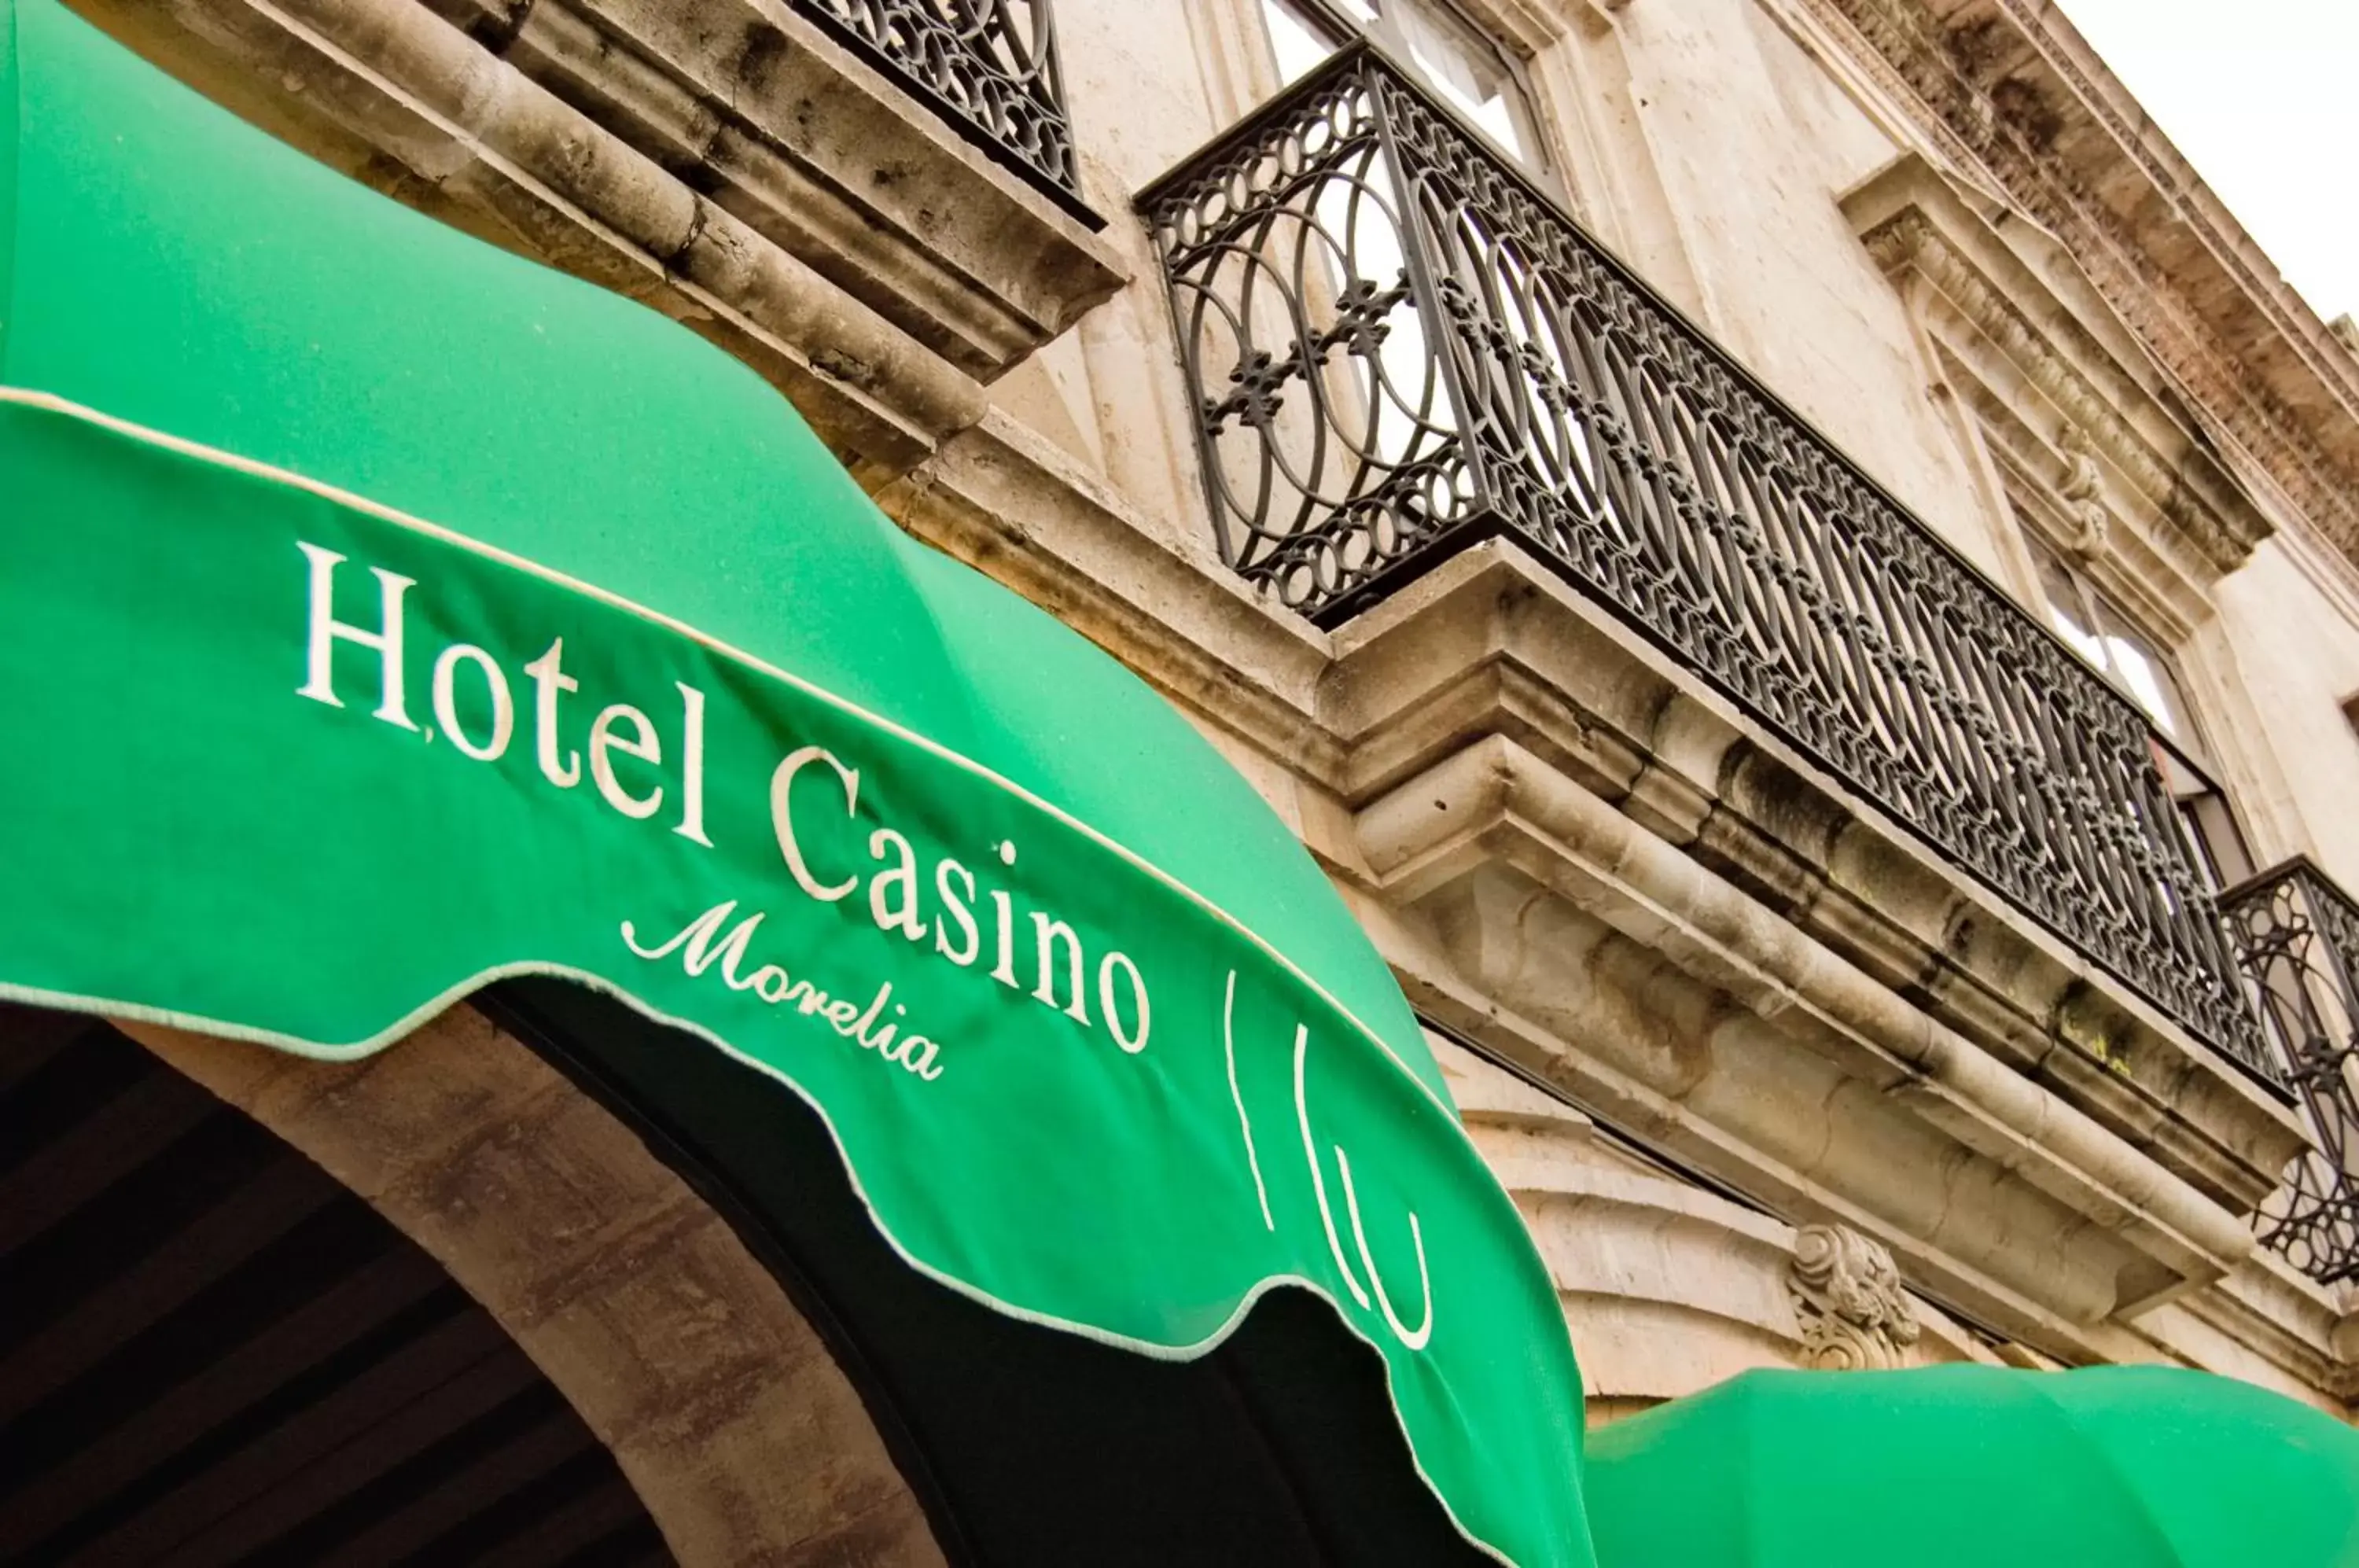 Facade/entrance in Hotel Casino Morelia